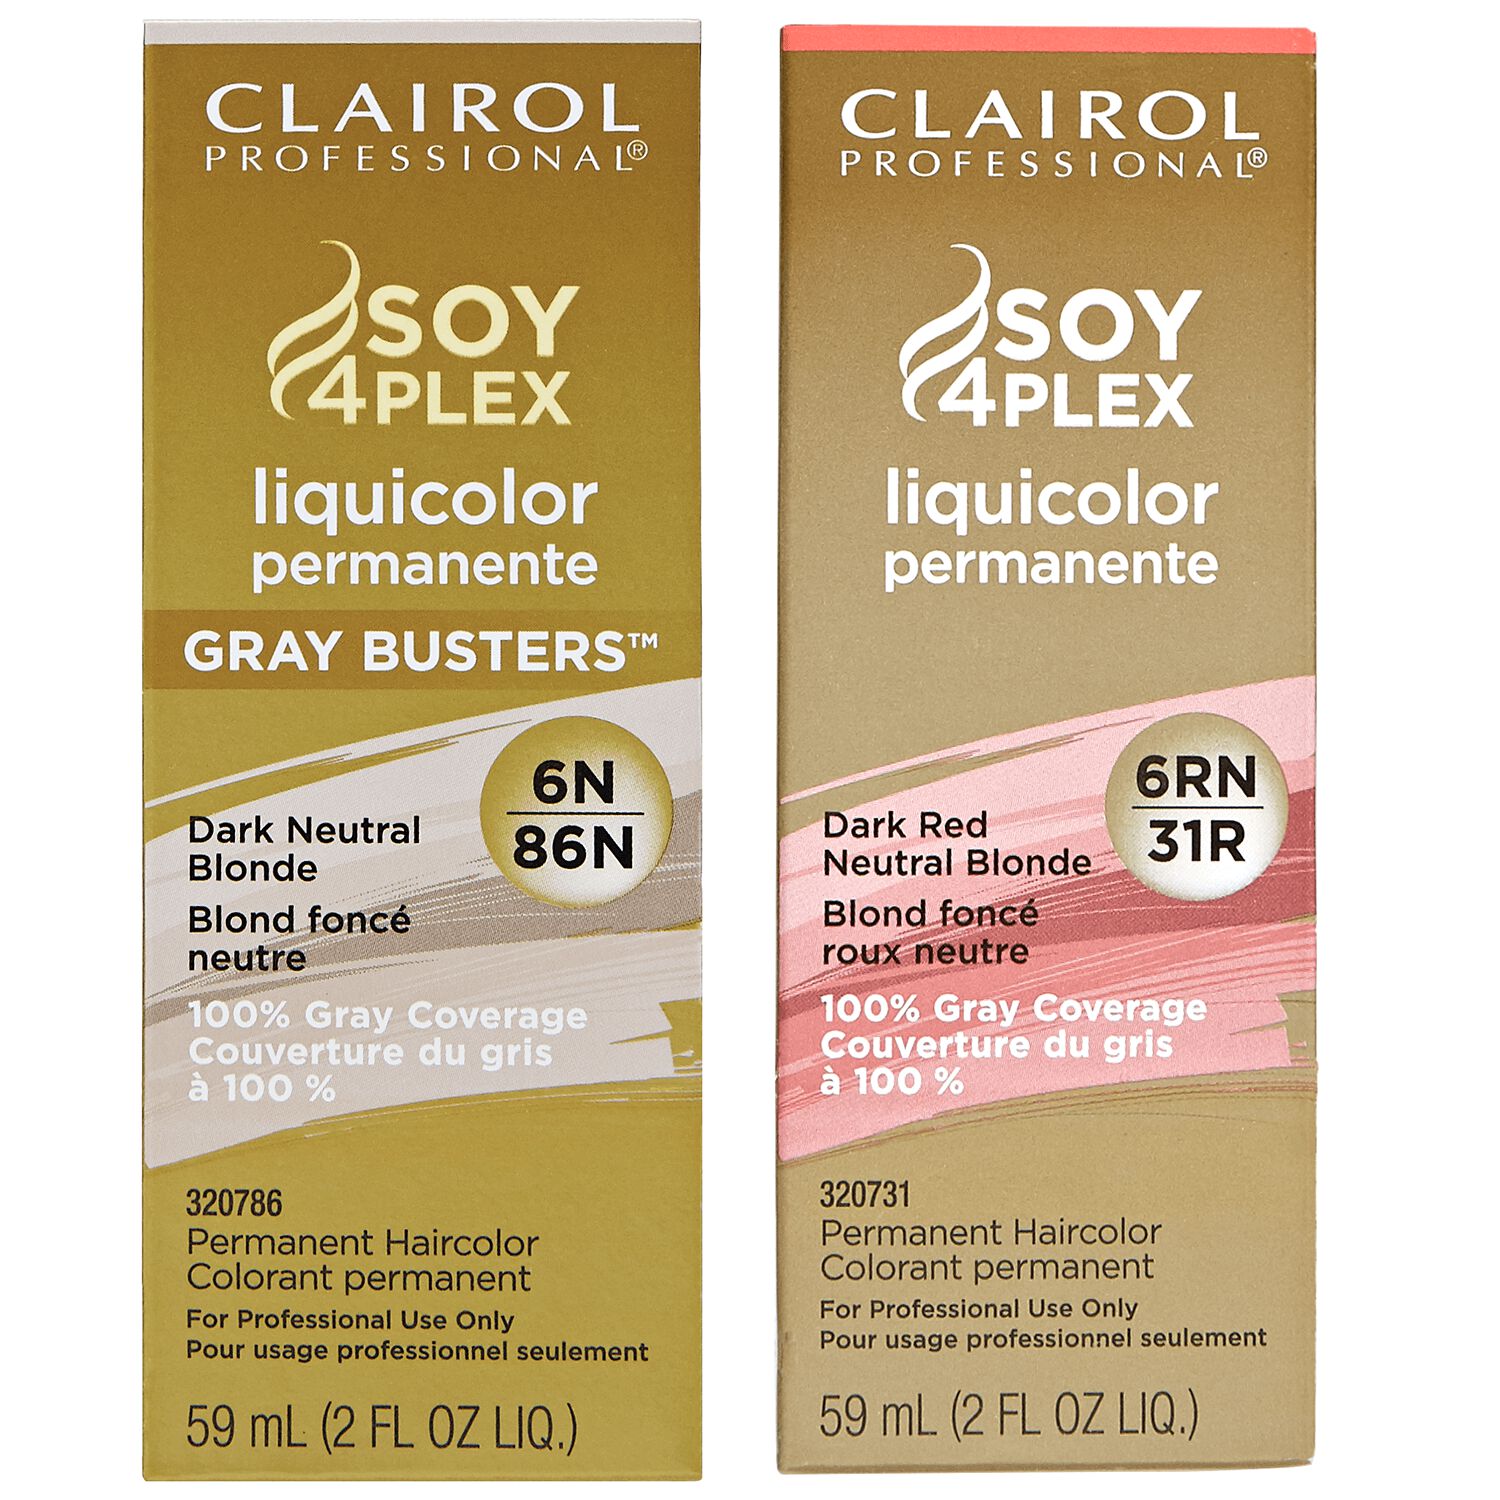 Clairol Professional LiquiColor Permanent Hair Color by Soy4Plex